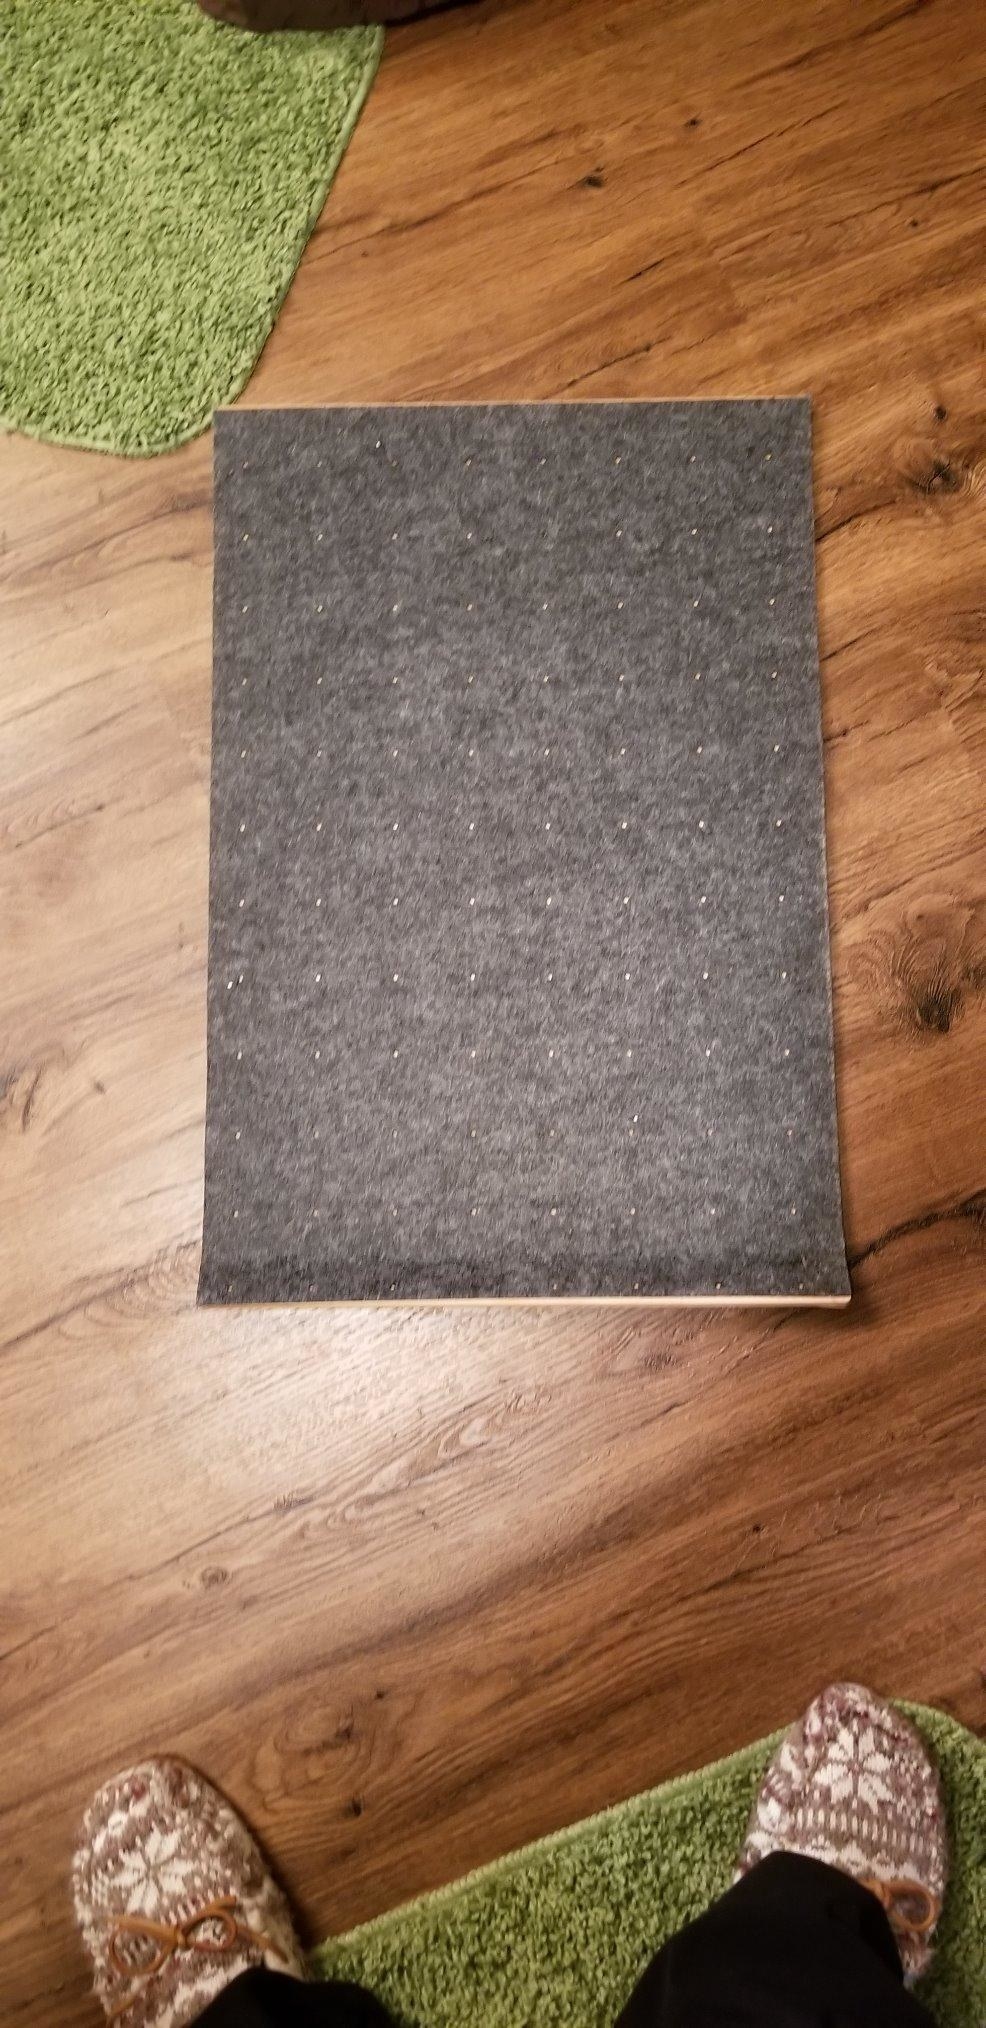 Dark Grey,4060cm Garneck Bathroom Rugs Soft Plush Anti-Slip Bath Mat Water Absorption Shaggy Carpet Heavy Duty Doormat for Indoor Outdoor Kitchen Sitting Room